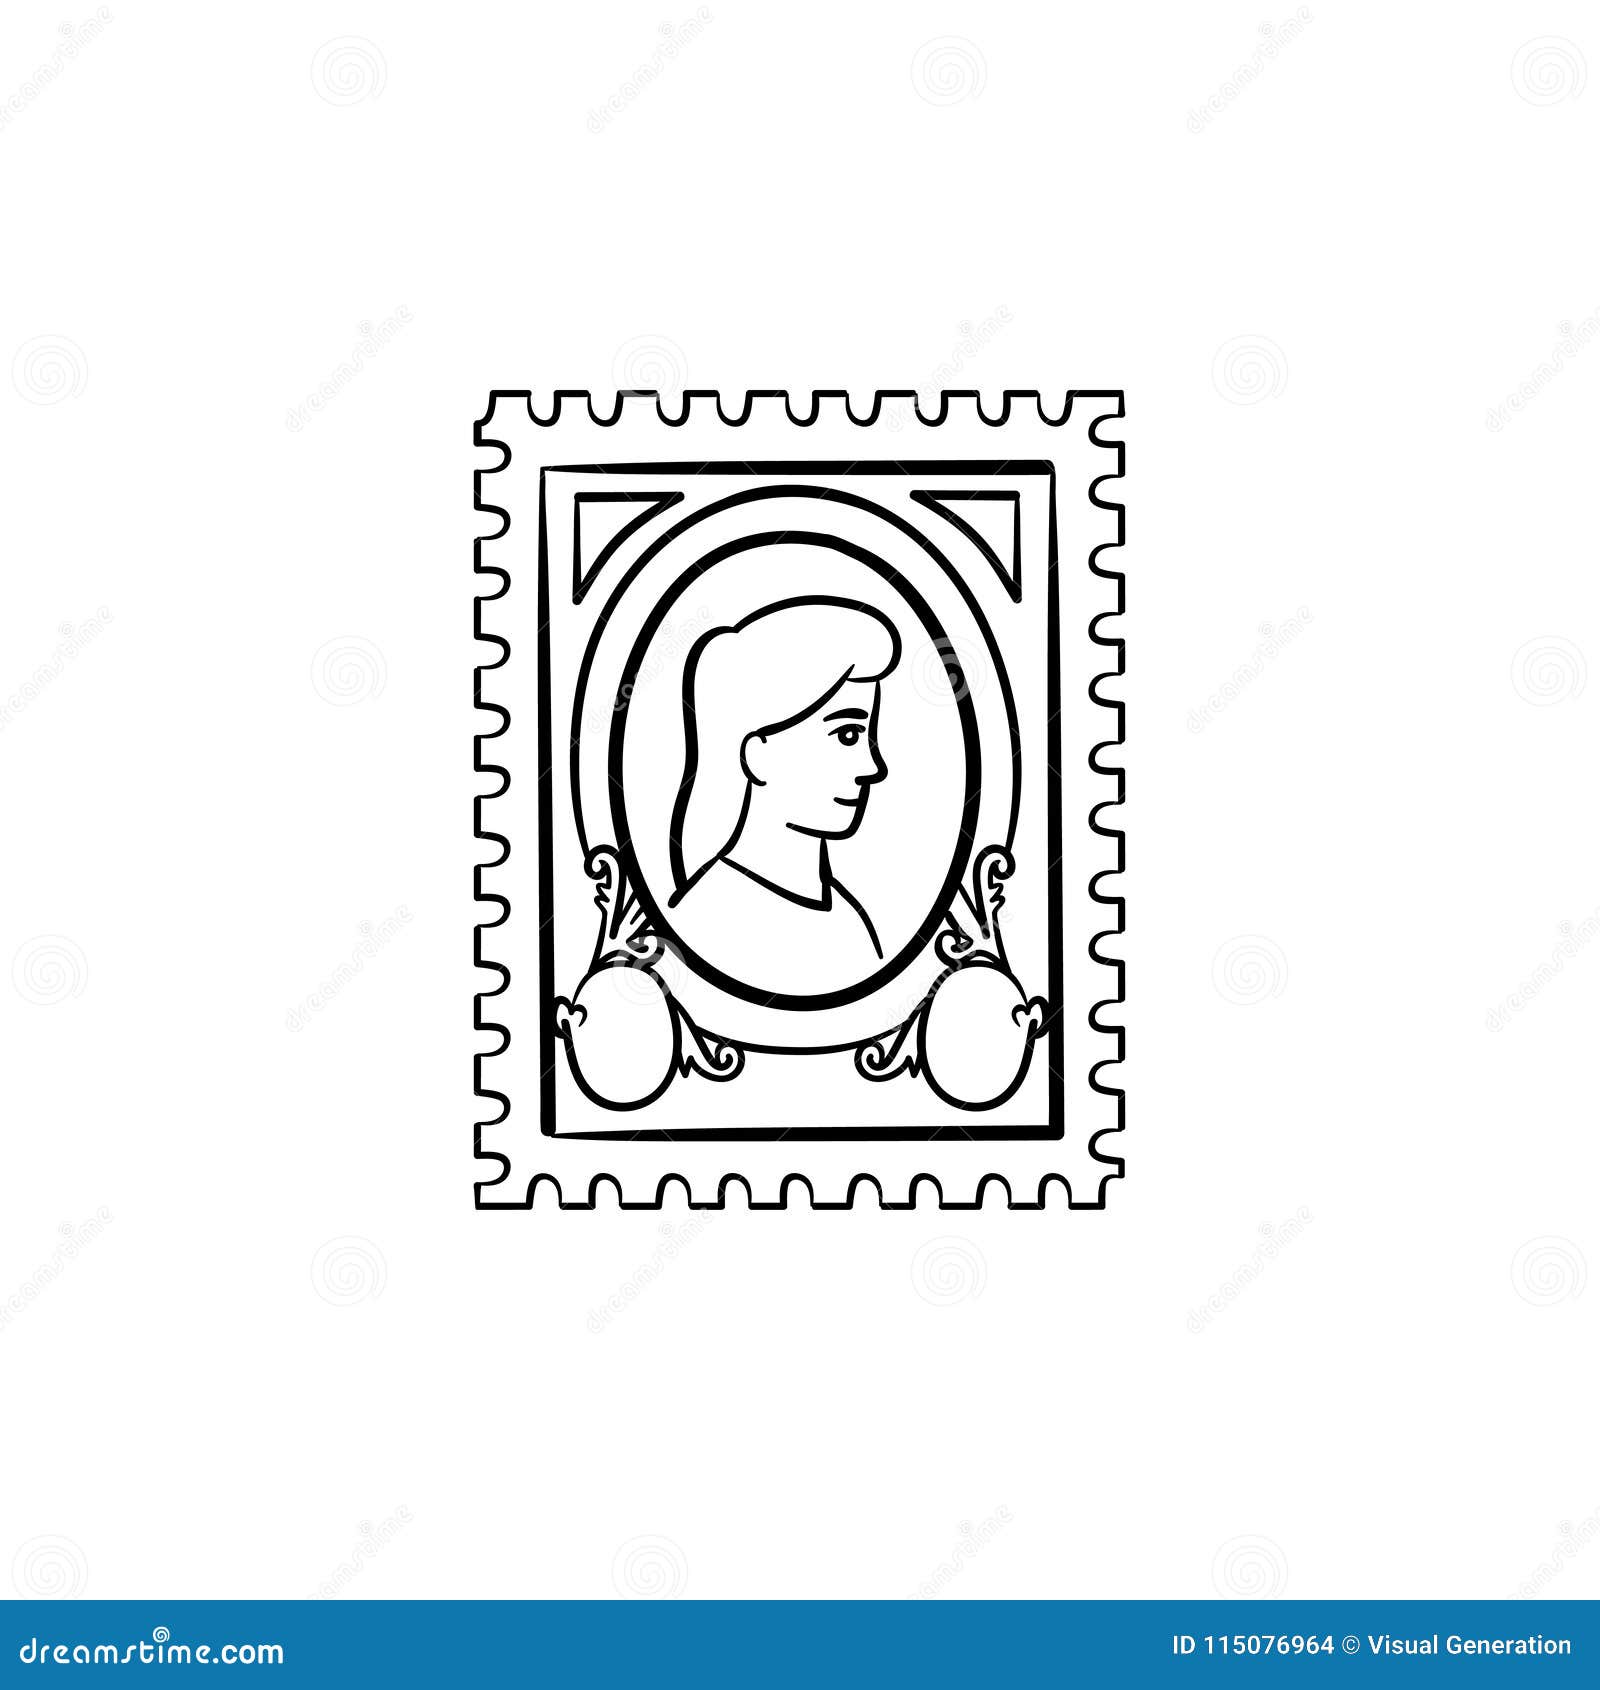 15 Postage Stamp Icons AI, PSD | Postage stamp design, Post stamp, Stamp